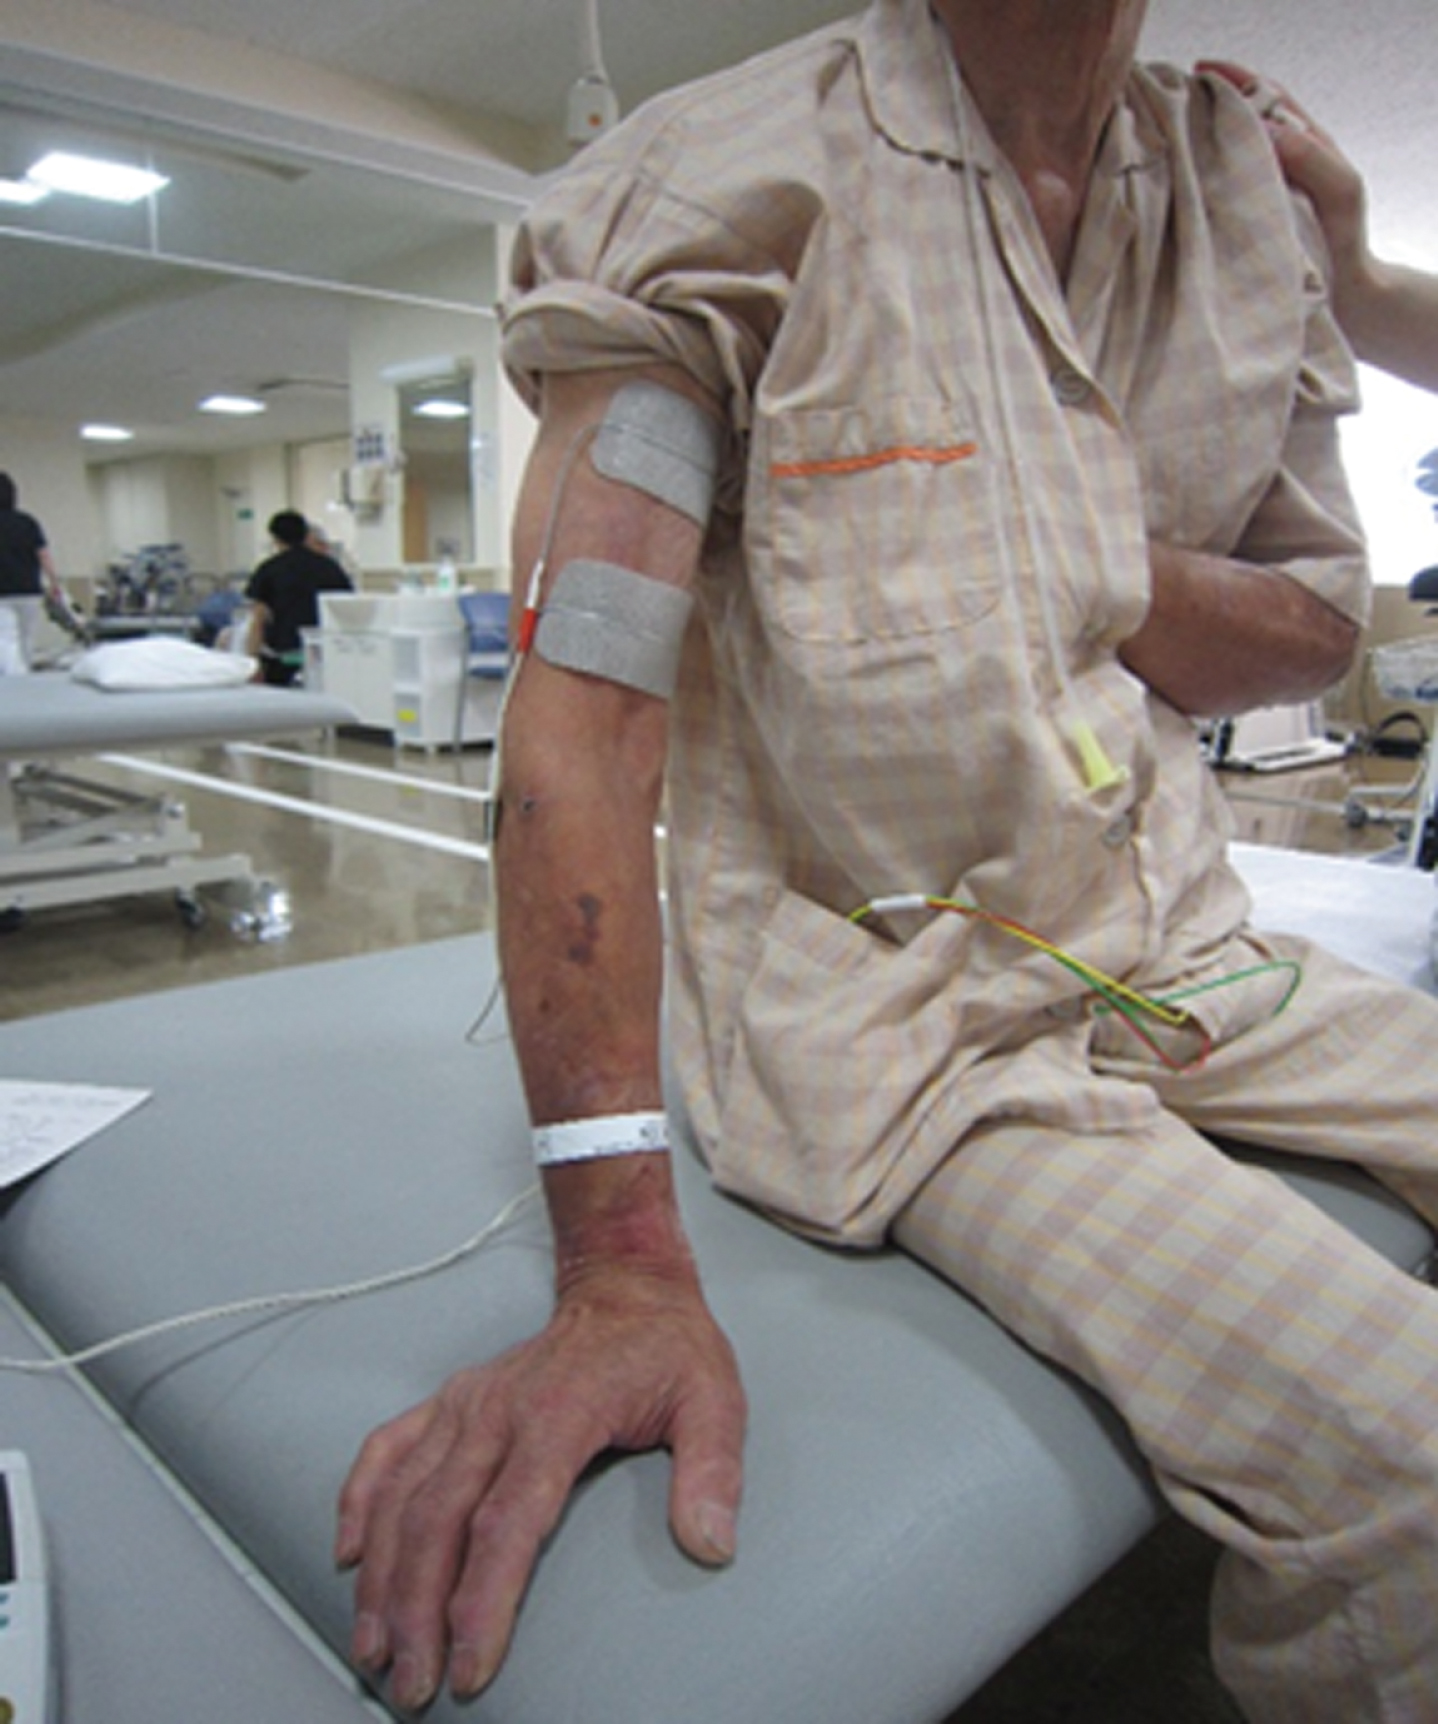 Pivot Physical Therapy - Electrical stimulation (e-stim) is a